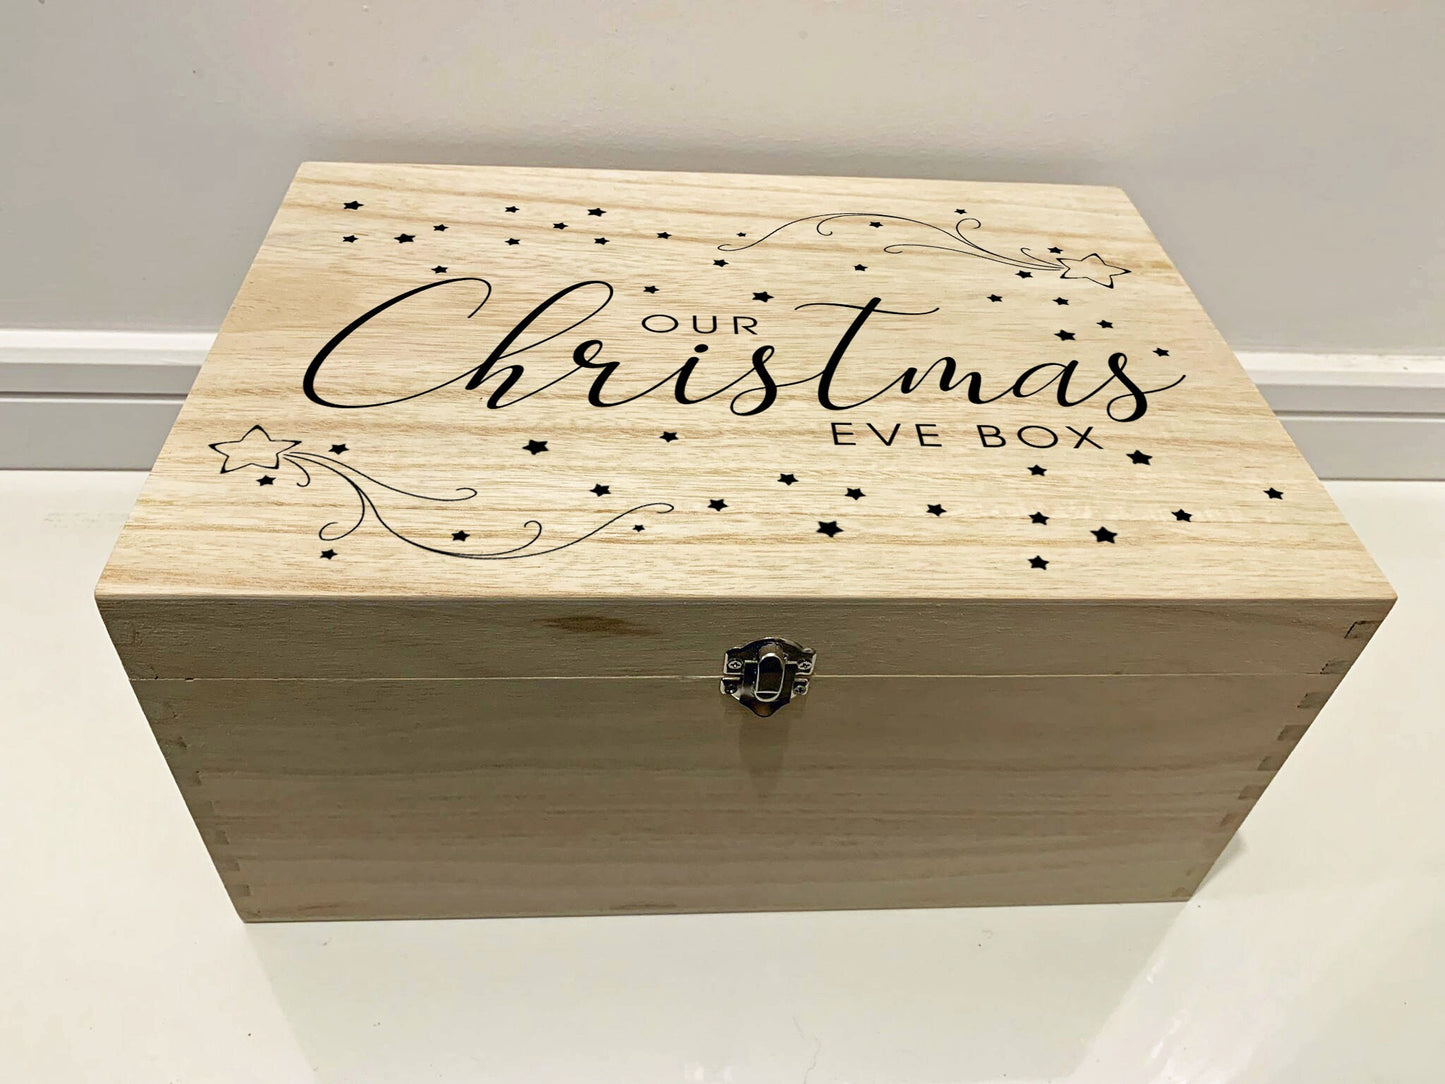 Large Personalised Engraved Wooden Christmas Eve Gift Box, Keepsake Memory Box with Shooting Stars - Resplendent Aurora